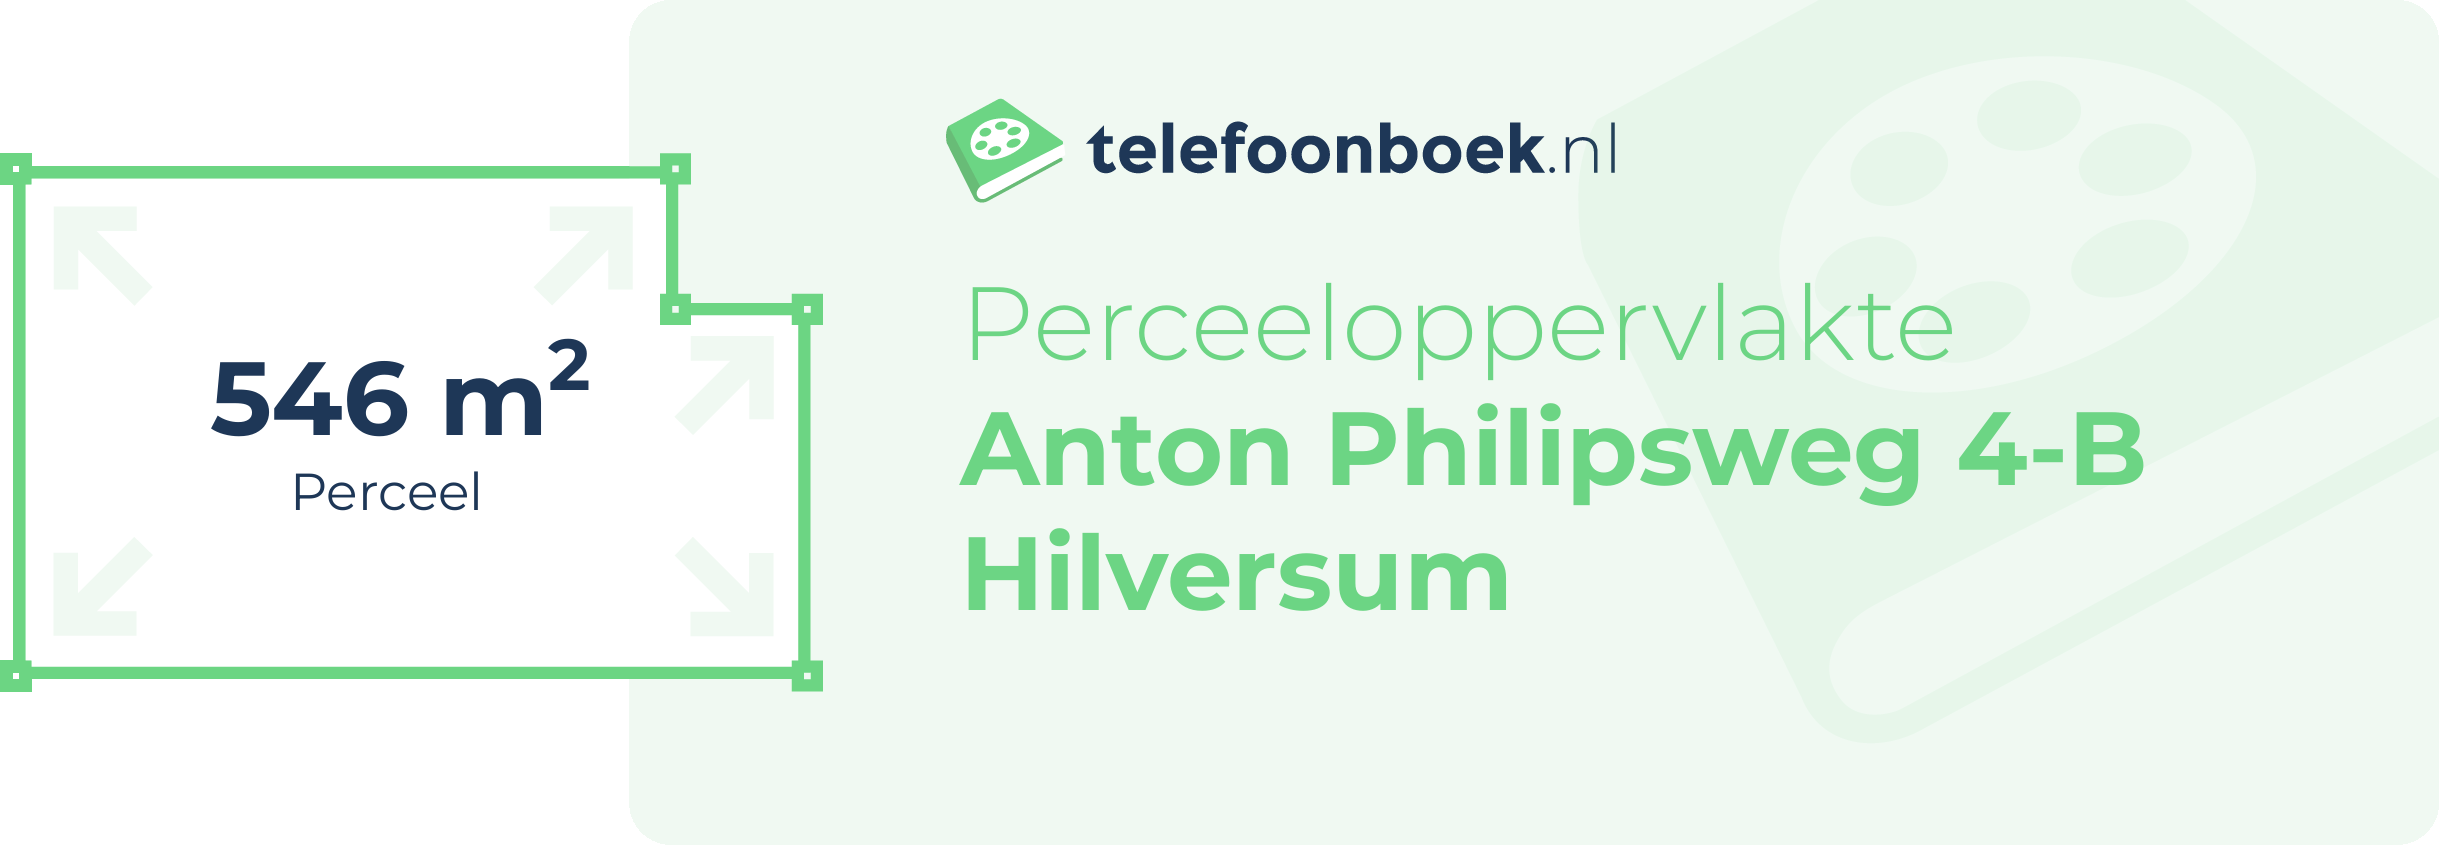 Perceeloppervlakte Anton Philipsweg 4-B Hilversum